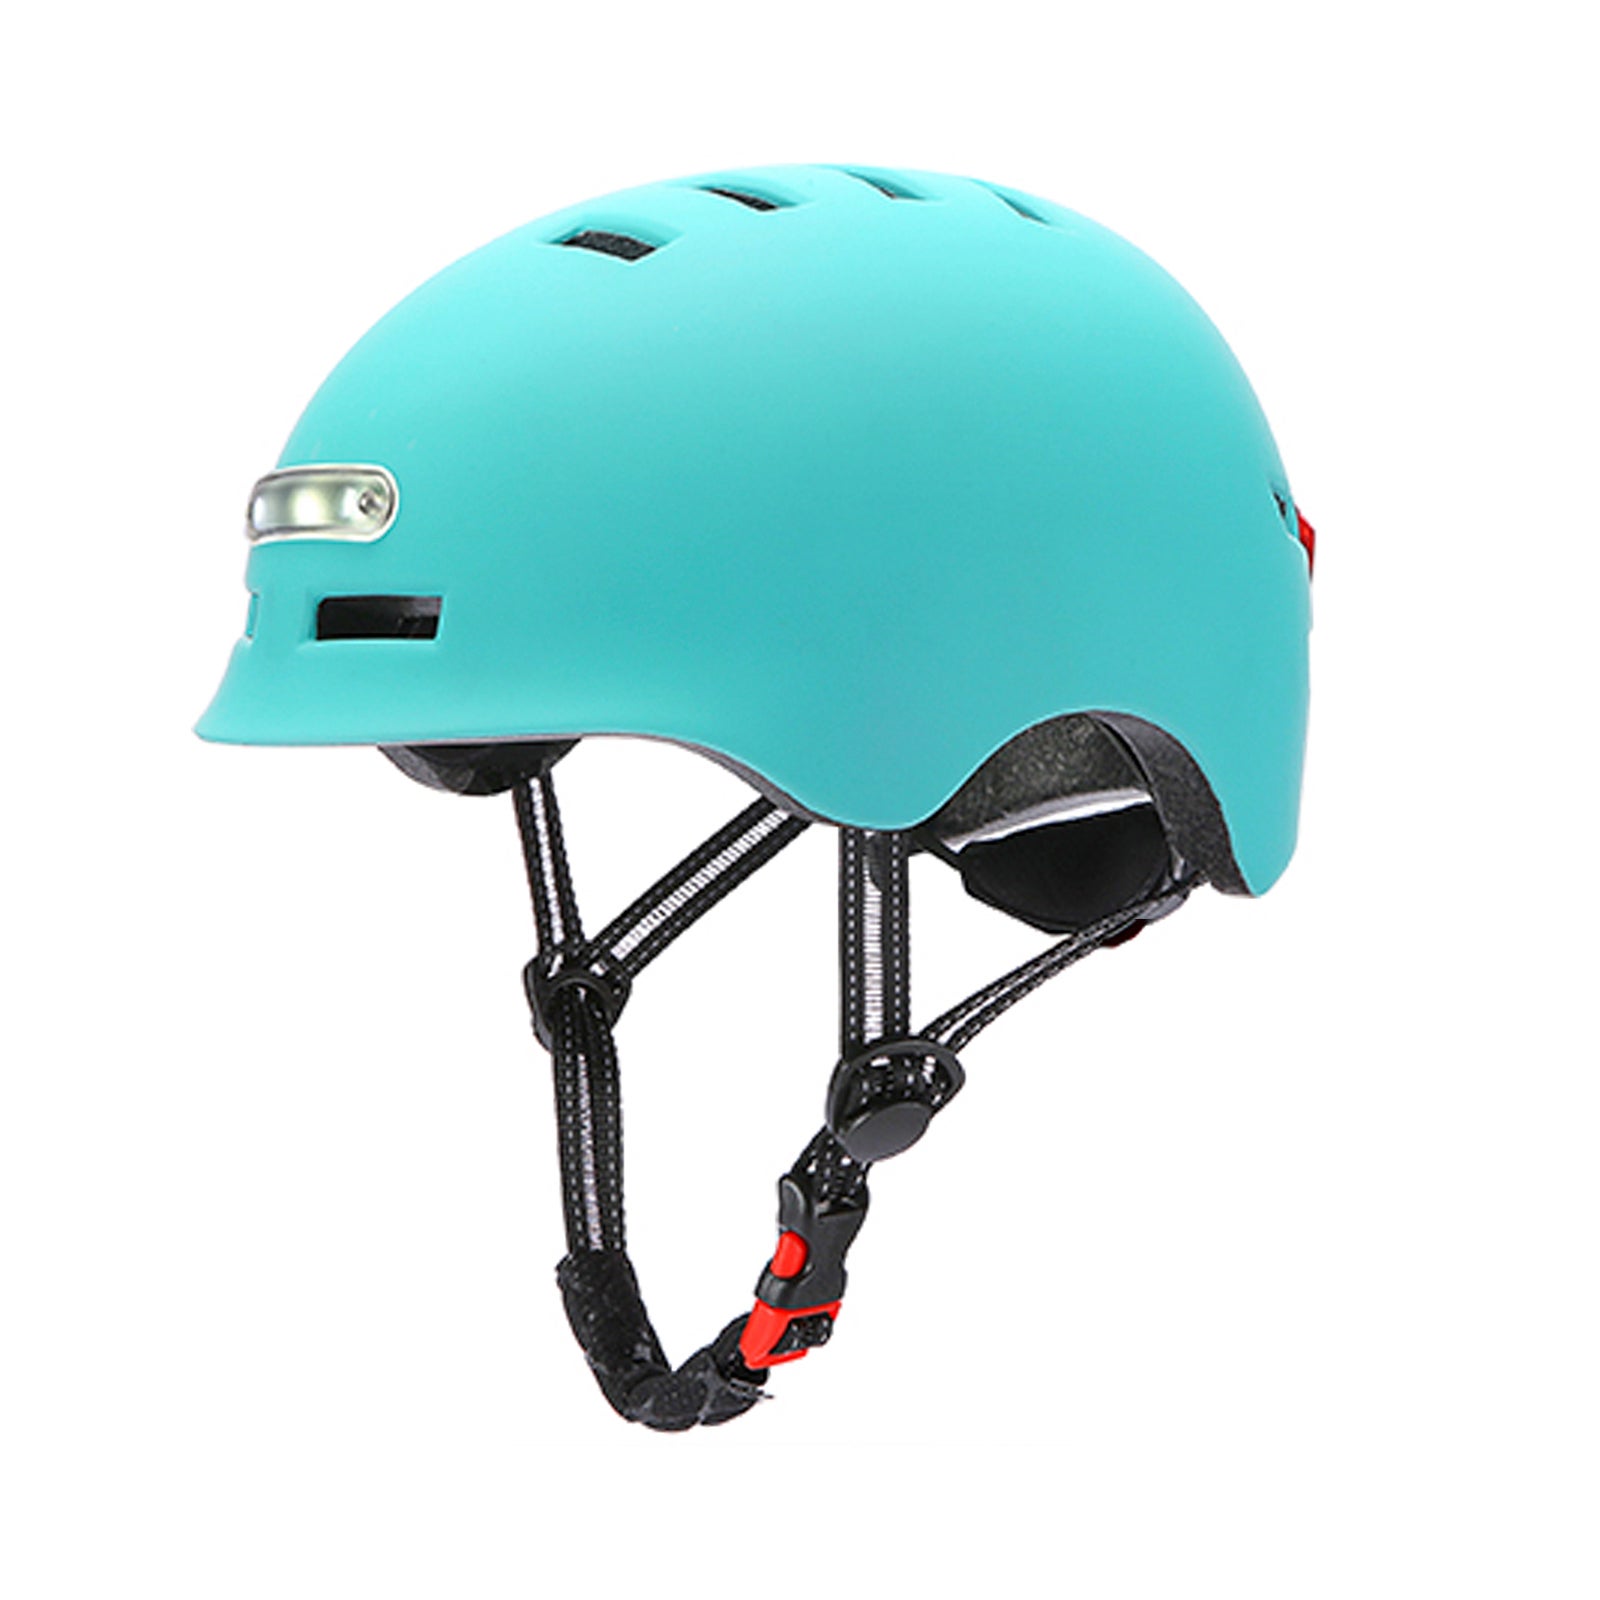 ACA M Size Blue Smart Bike Cycling Bicycle Helmet Headlight Tail Warning Light Outdoor Sport